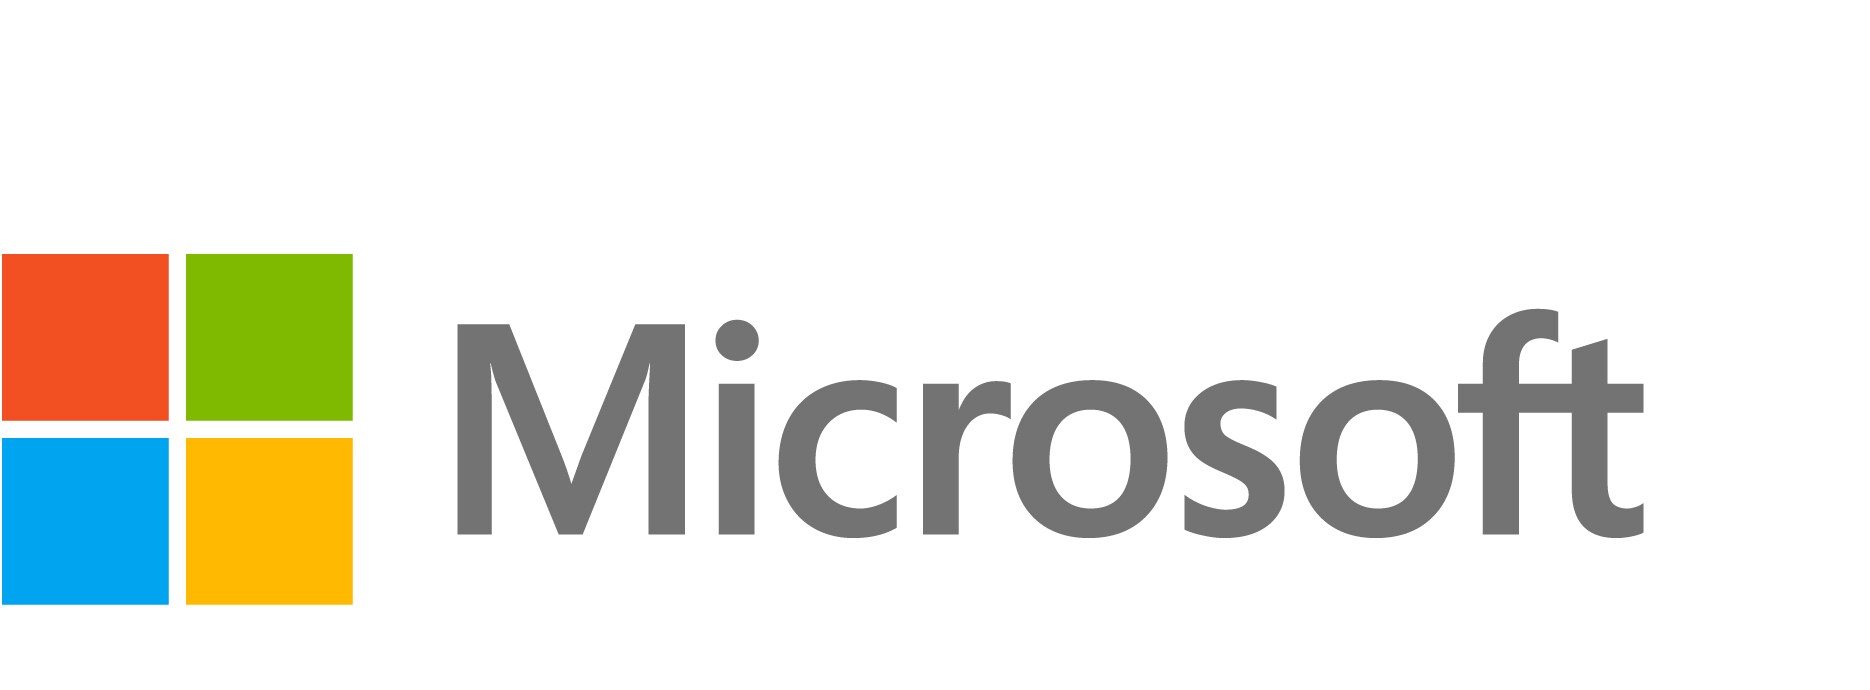 Microsoft Exchange Server Enterprise Edition - software assurance - 1 serve